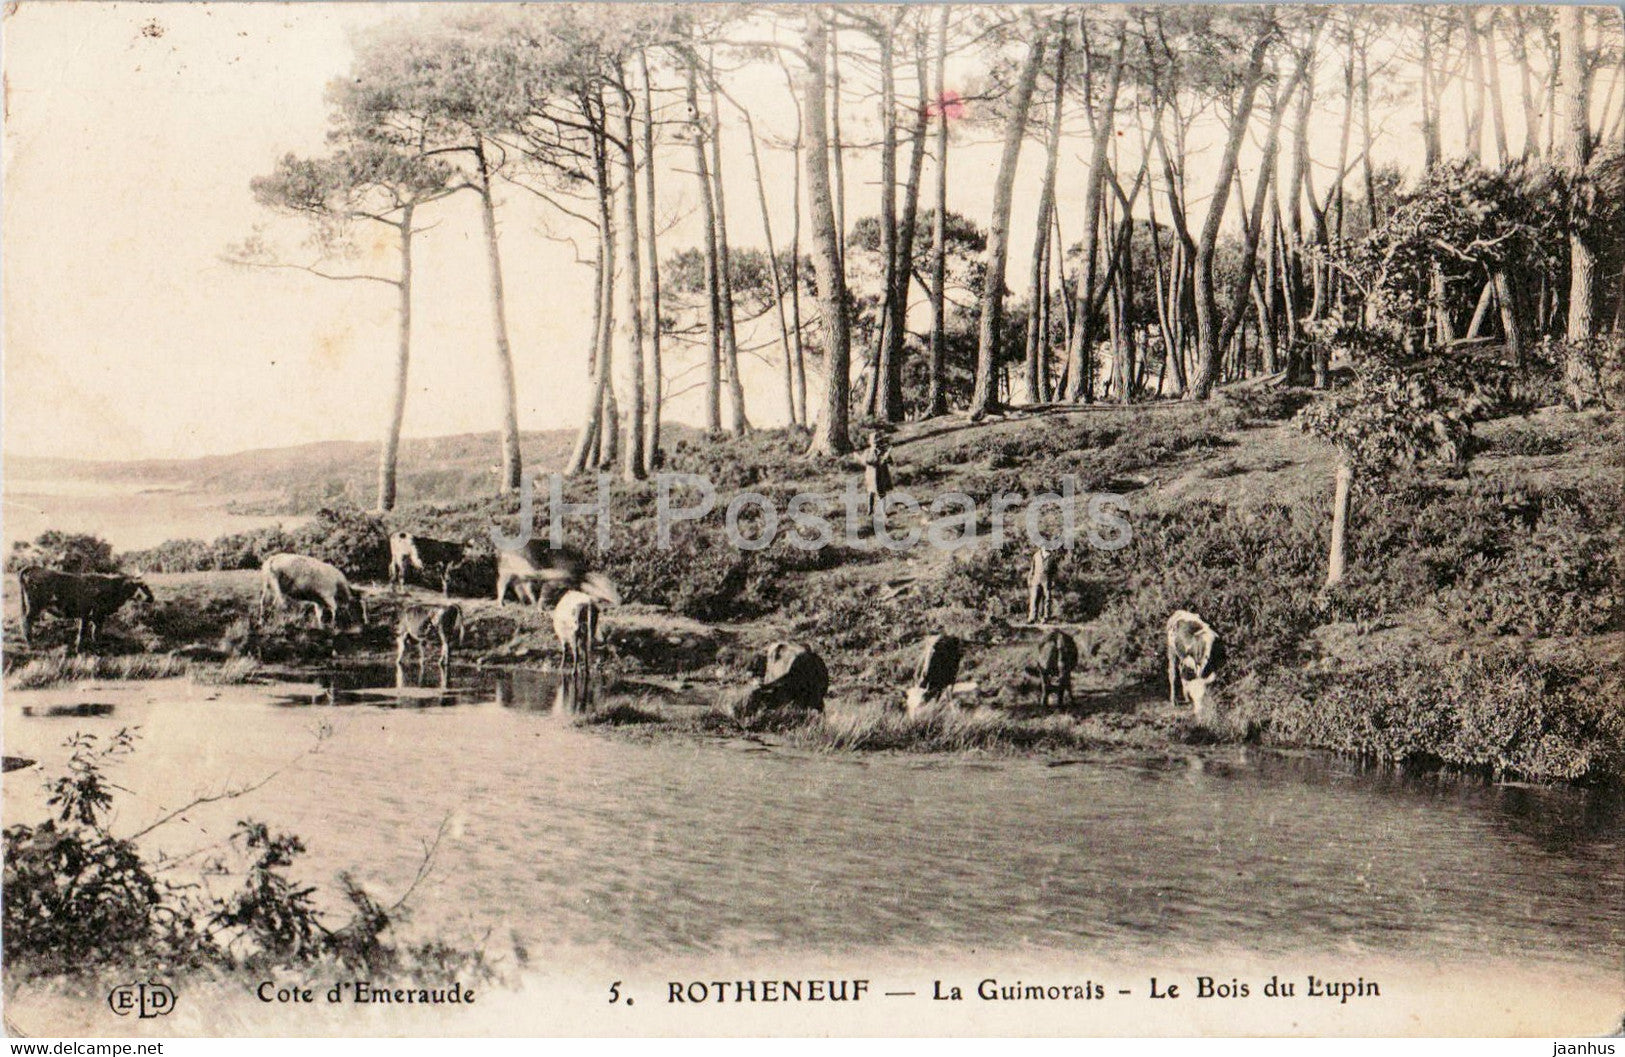 Rotheneuf - La Guimorais  - Le Bois du Lupin - Cote d'Emeraude - 5 - old postcard - 1920 - France - used - JH Postcards